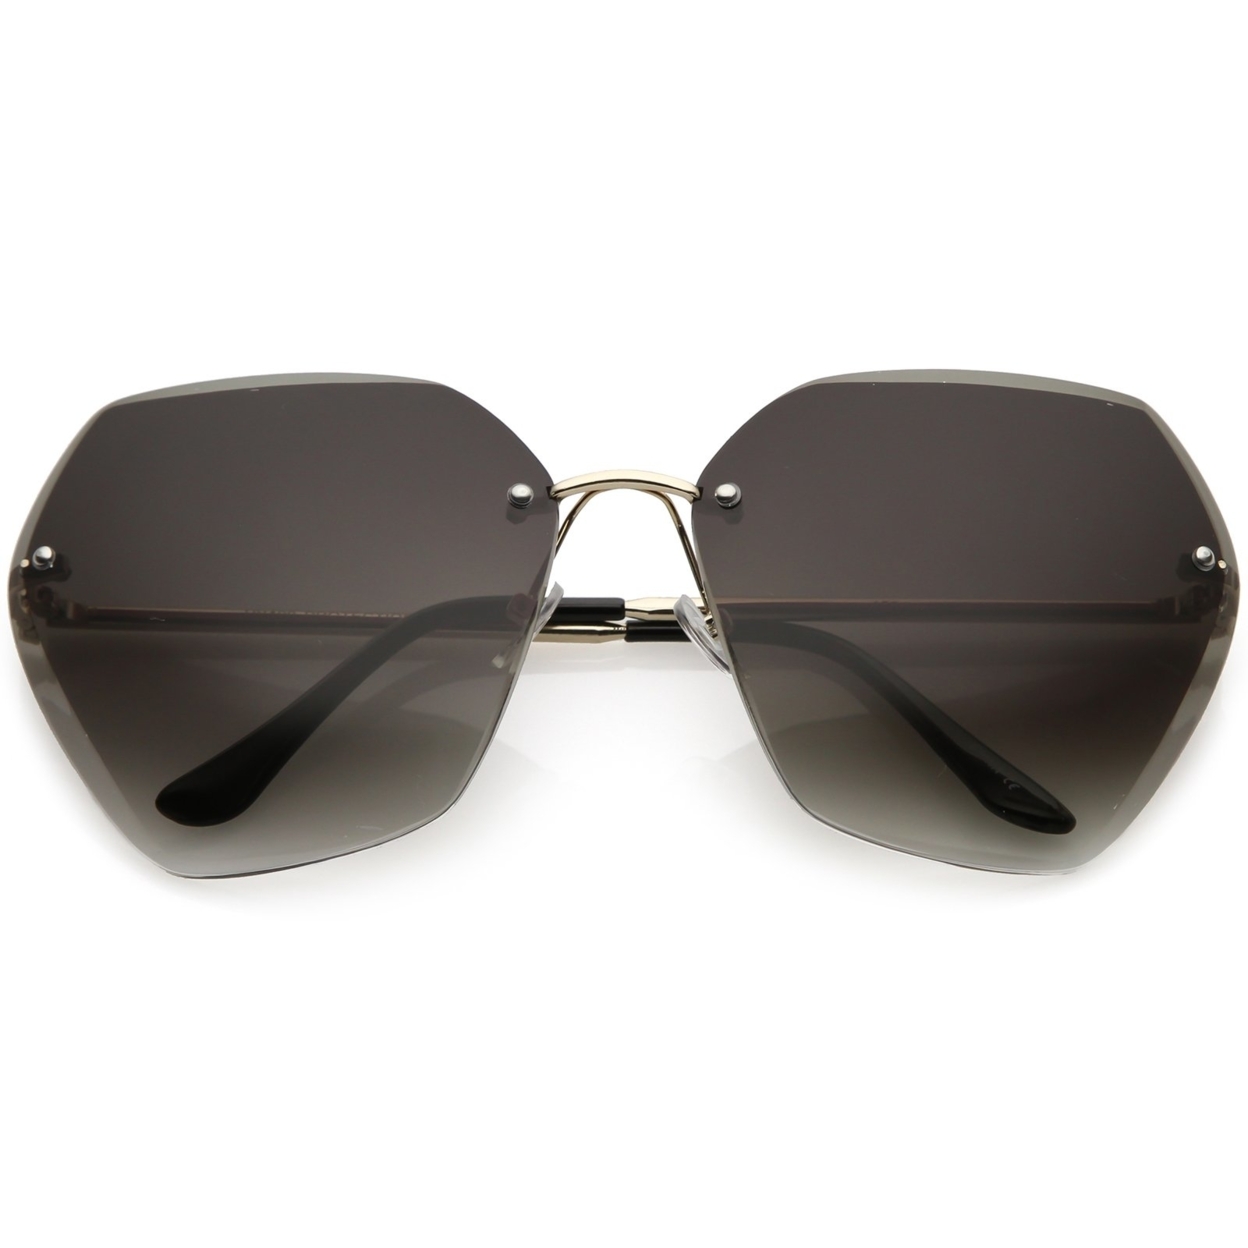 Oversize Rimless Geometric Sunglasses Beveled Gradient Lens 70mm - Gold / Grey Gradient